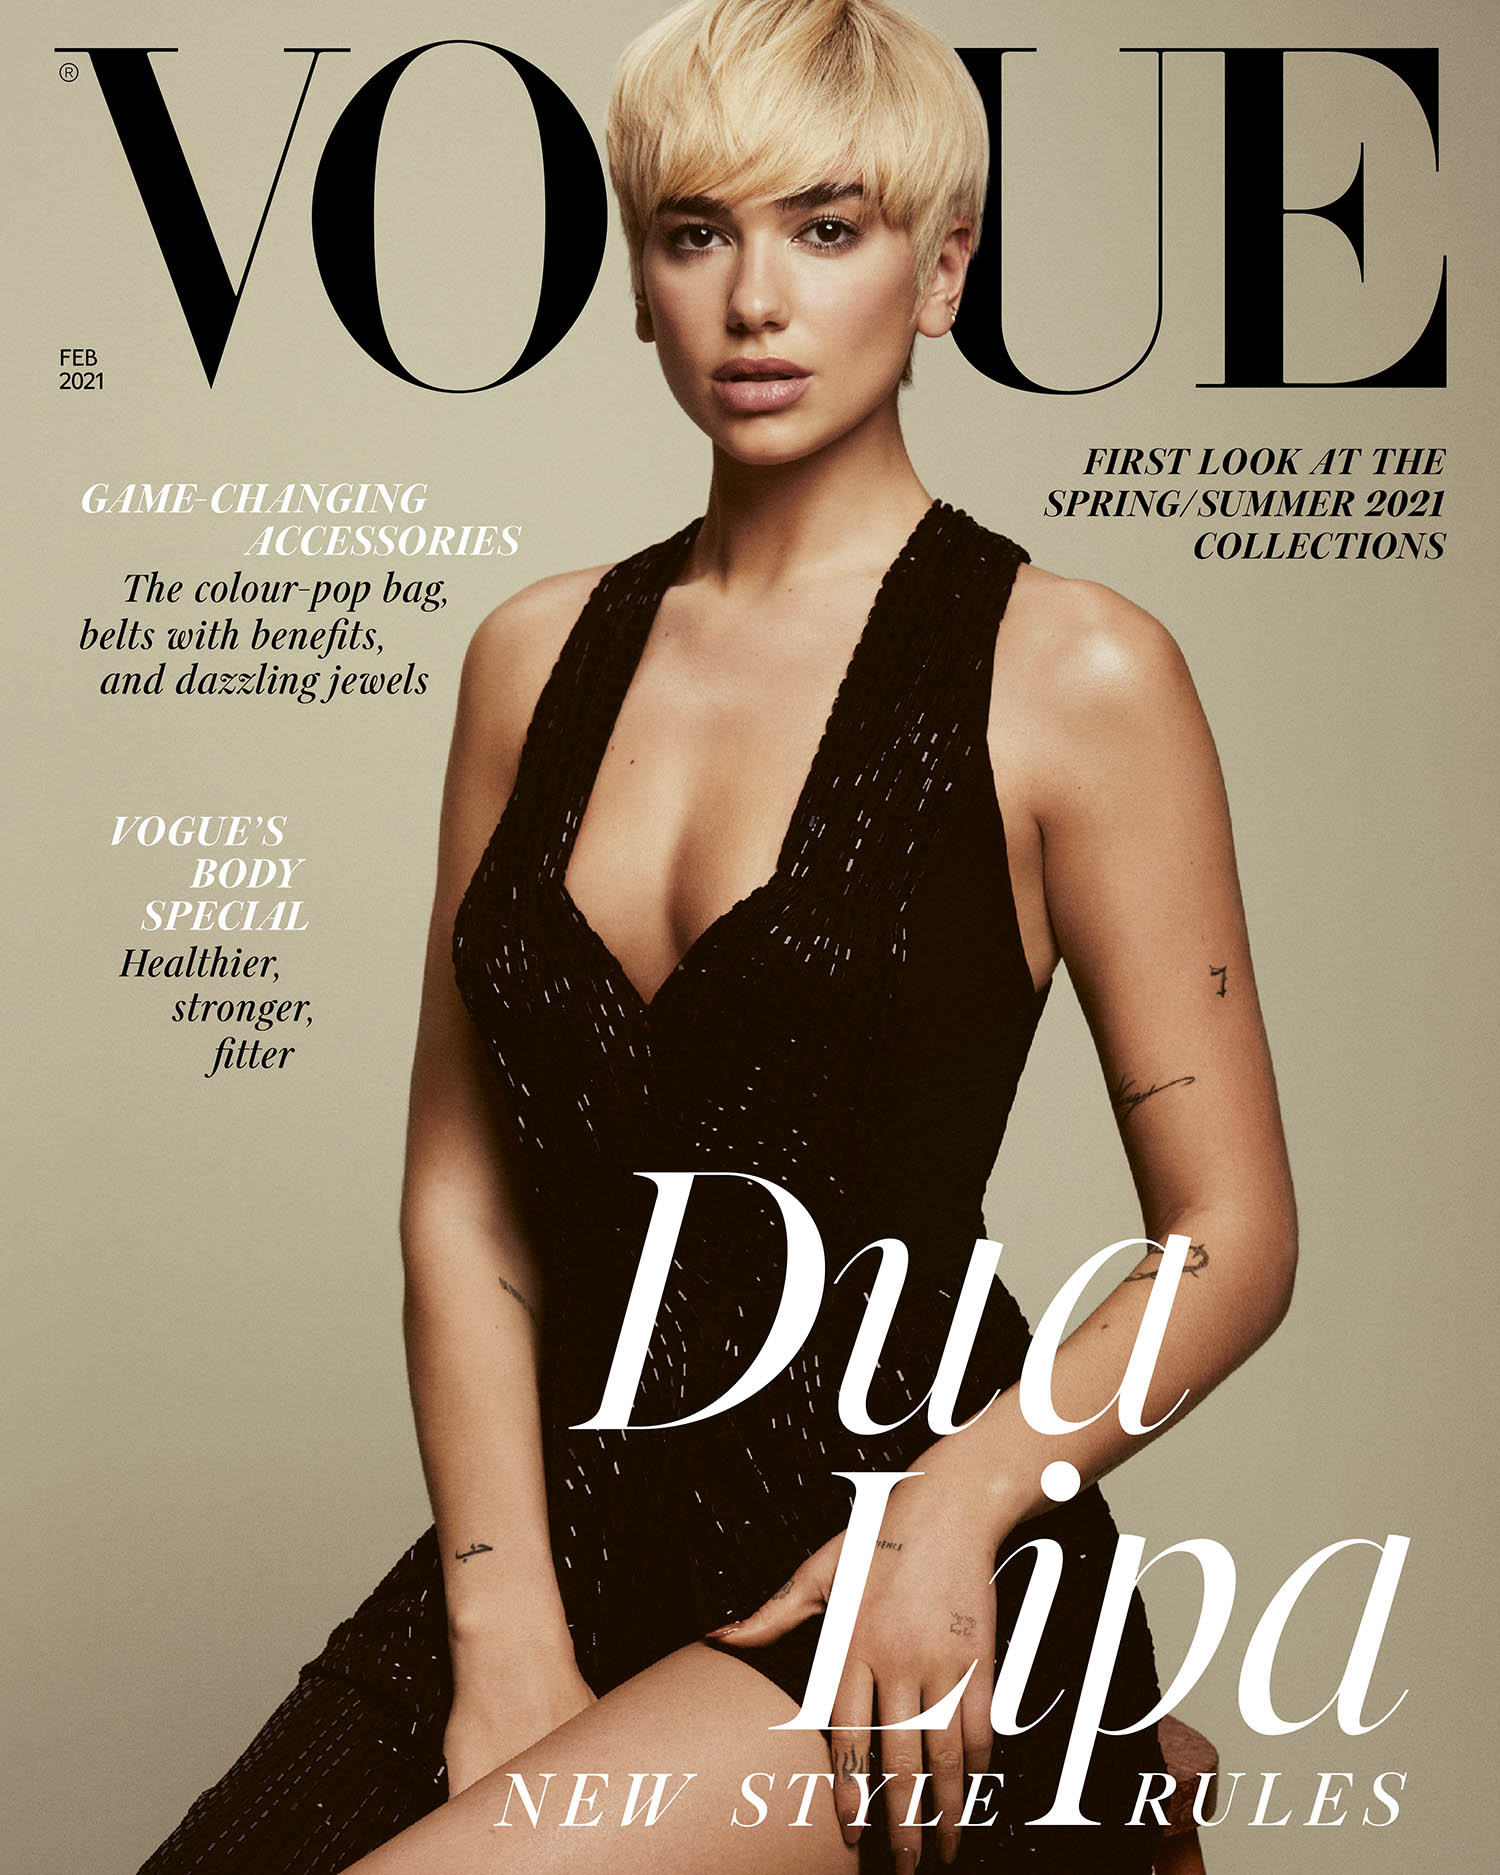 Dua Lipa covers British Vogue February 2021 by Emma Summerton